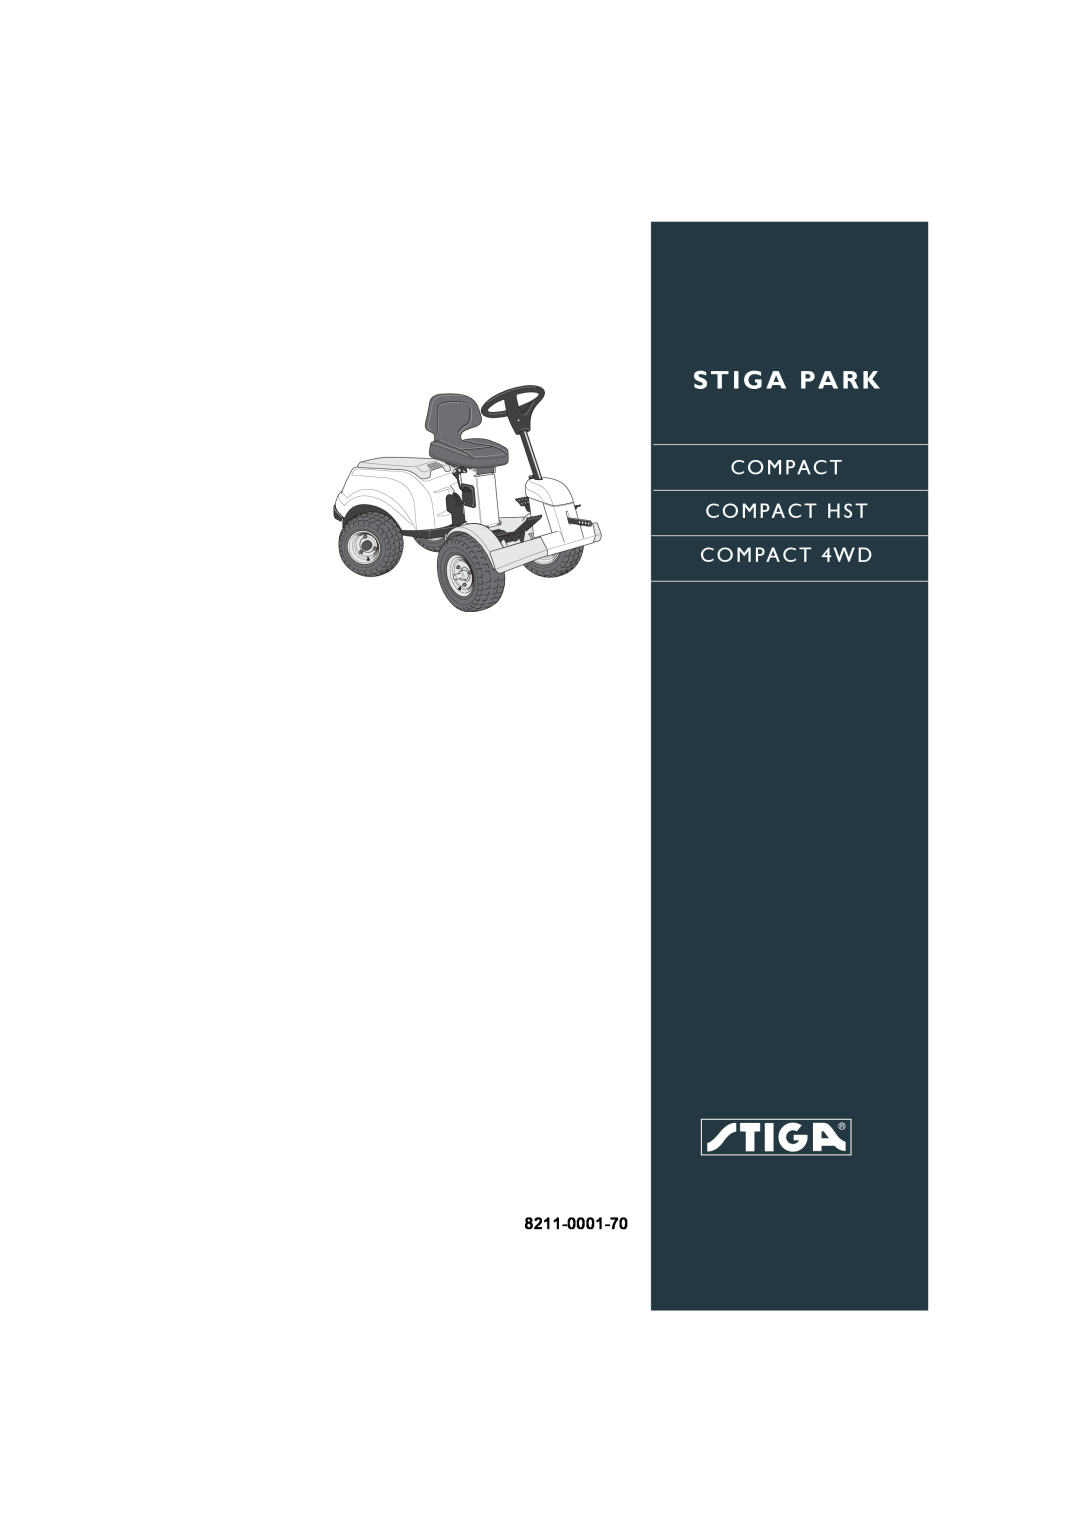 Stiga 8211-0001-70 manual FR....56, Stiga Park, COMPACT COMPACT HST COMPACT 4WD, Bruksanvisning, Käyttöohjeet, Sv, DE...38 